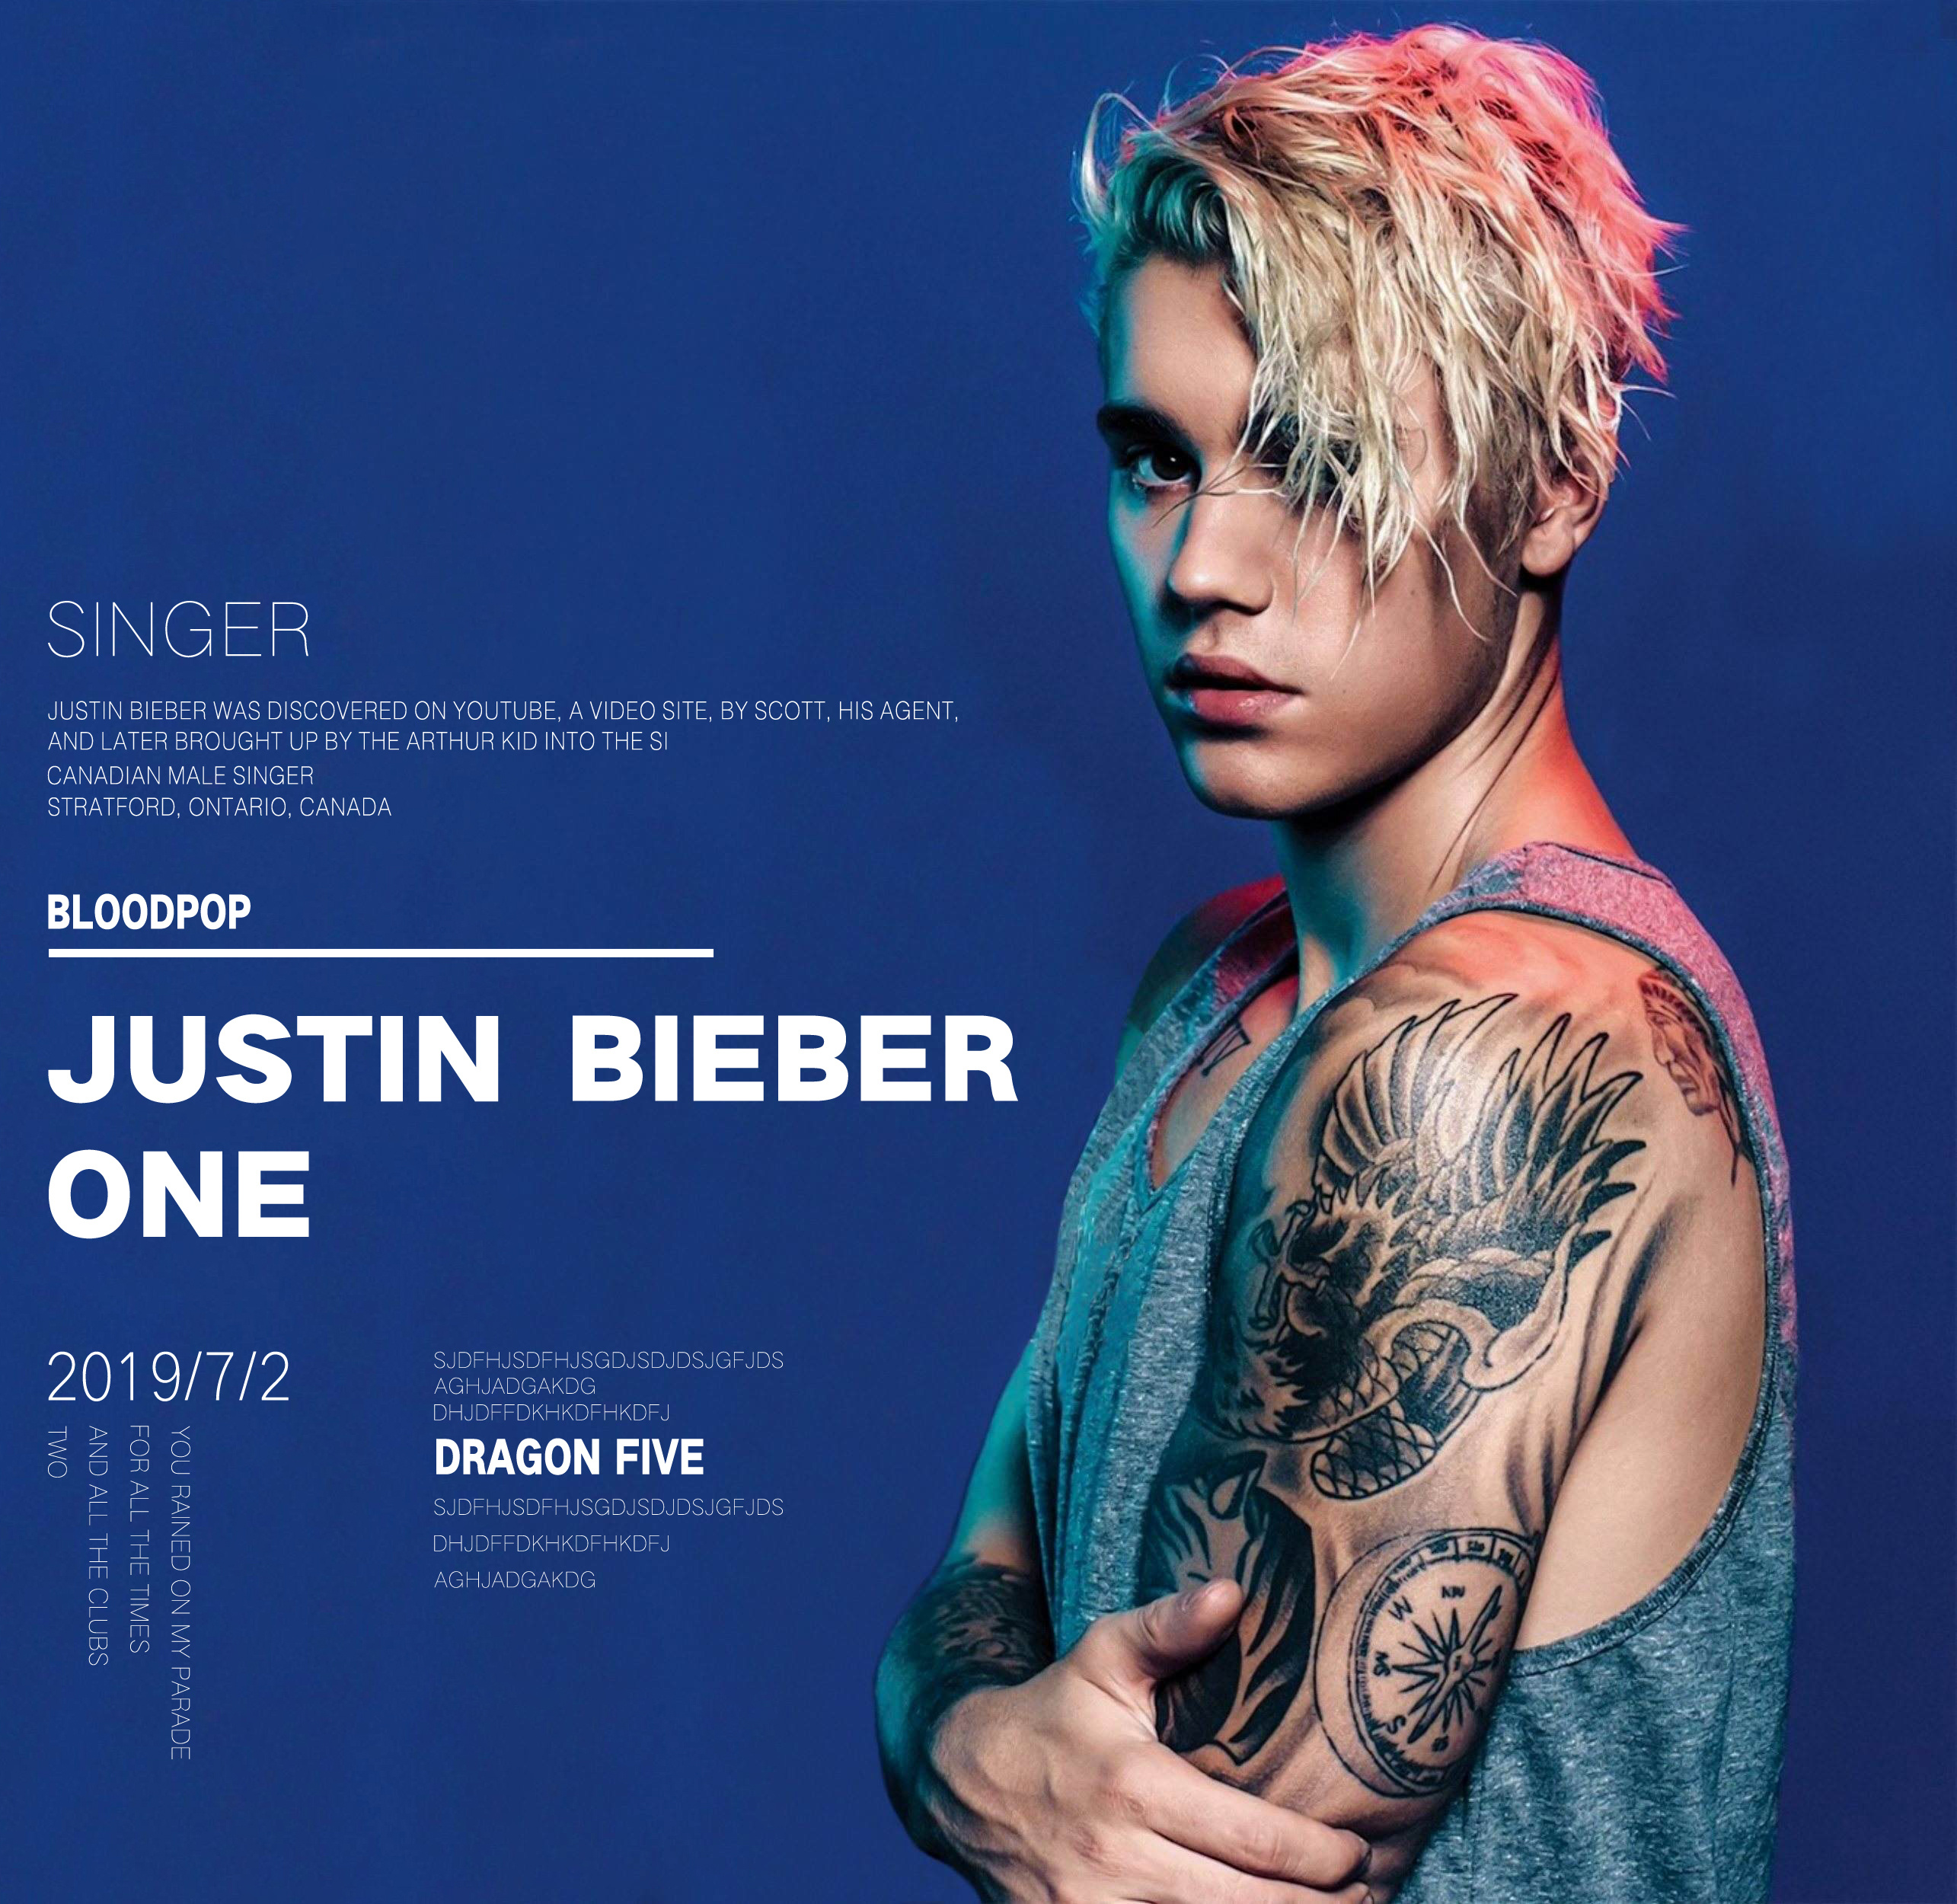 Justin Bieber 4K Wallpapers - Top Free Justin Bieber 4K Backgrounds ...